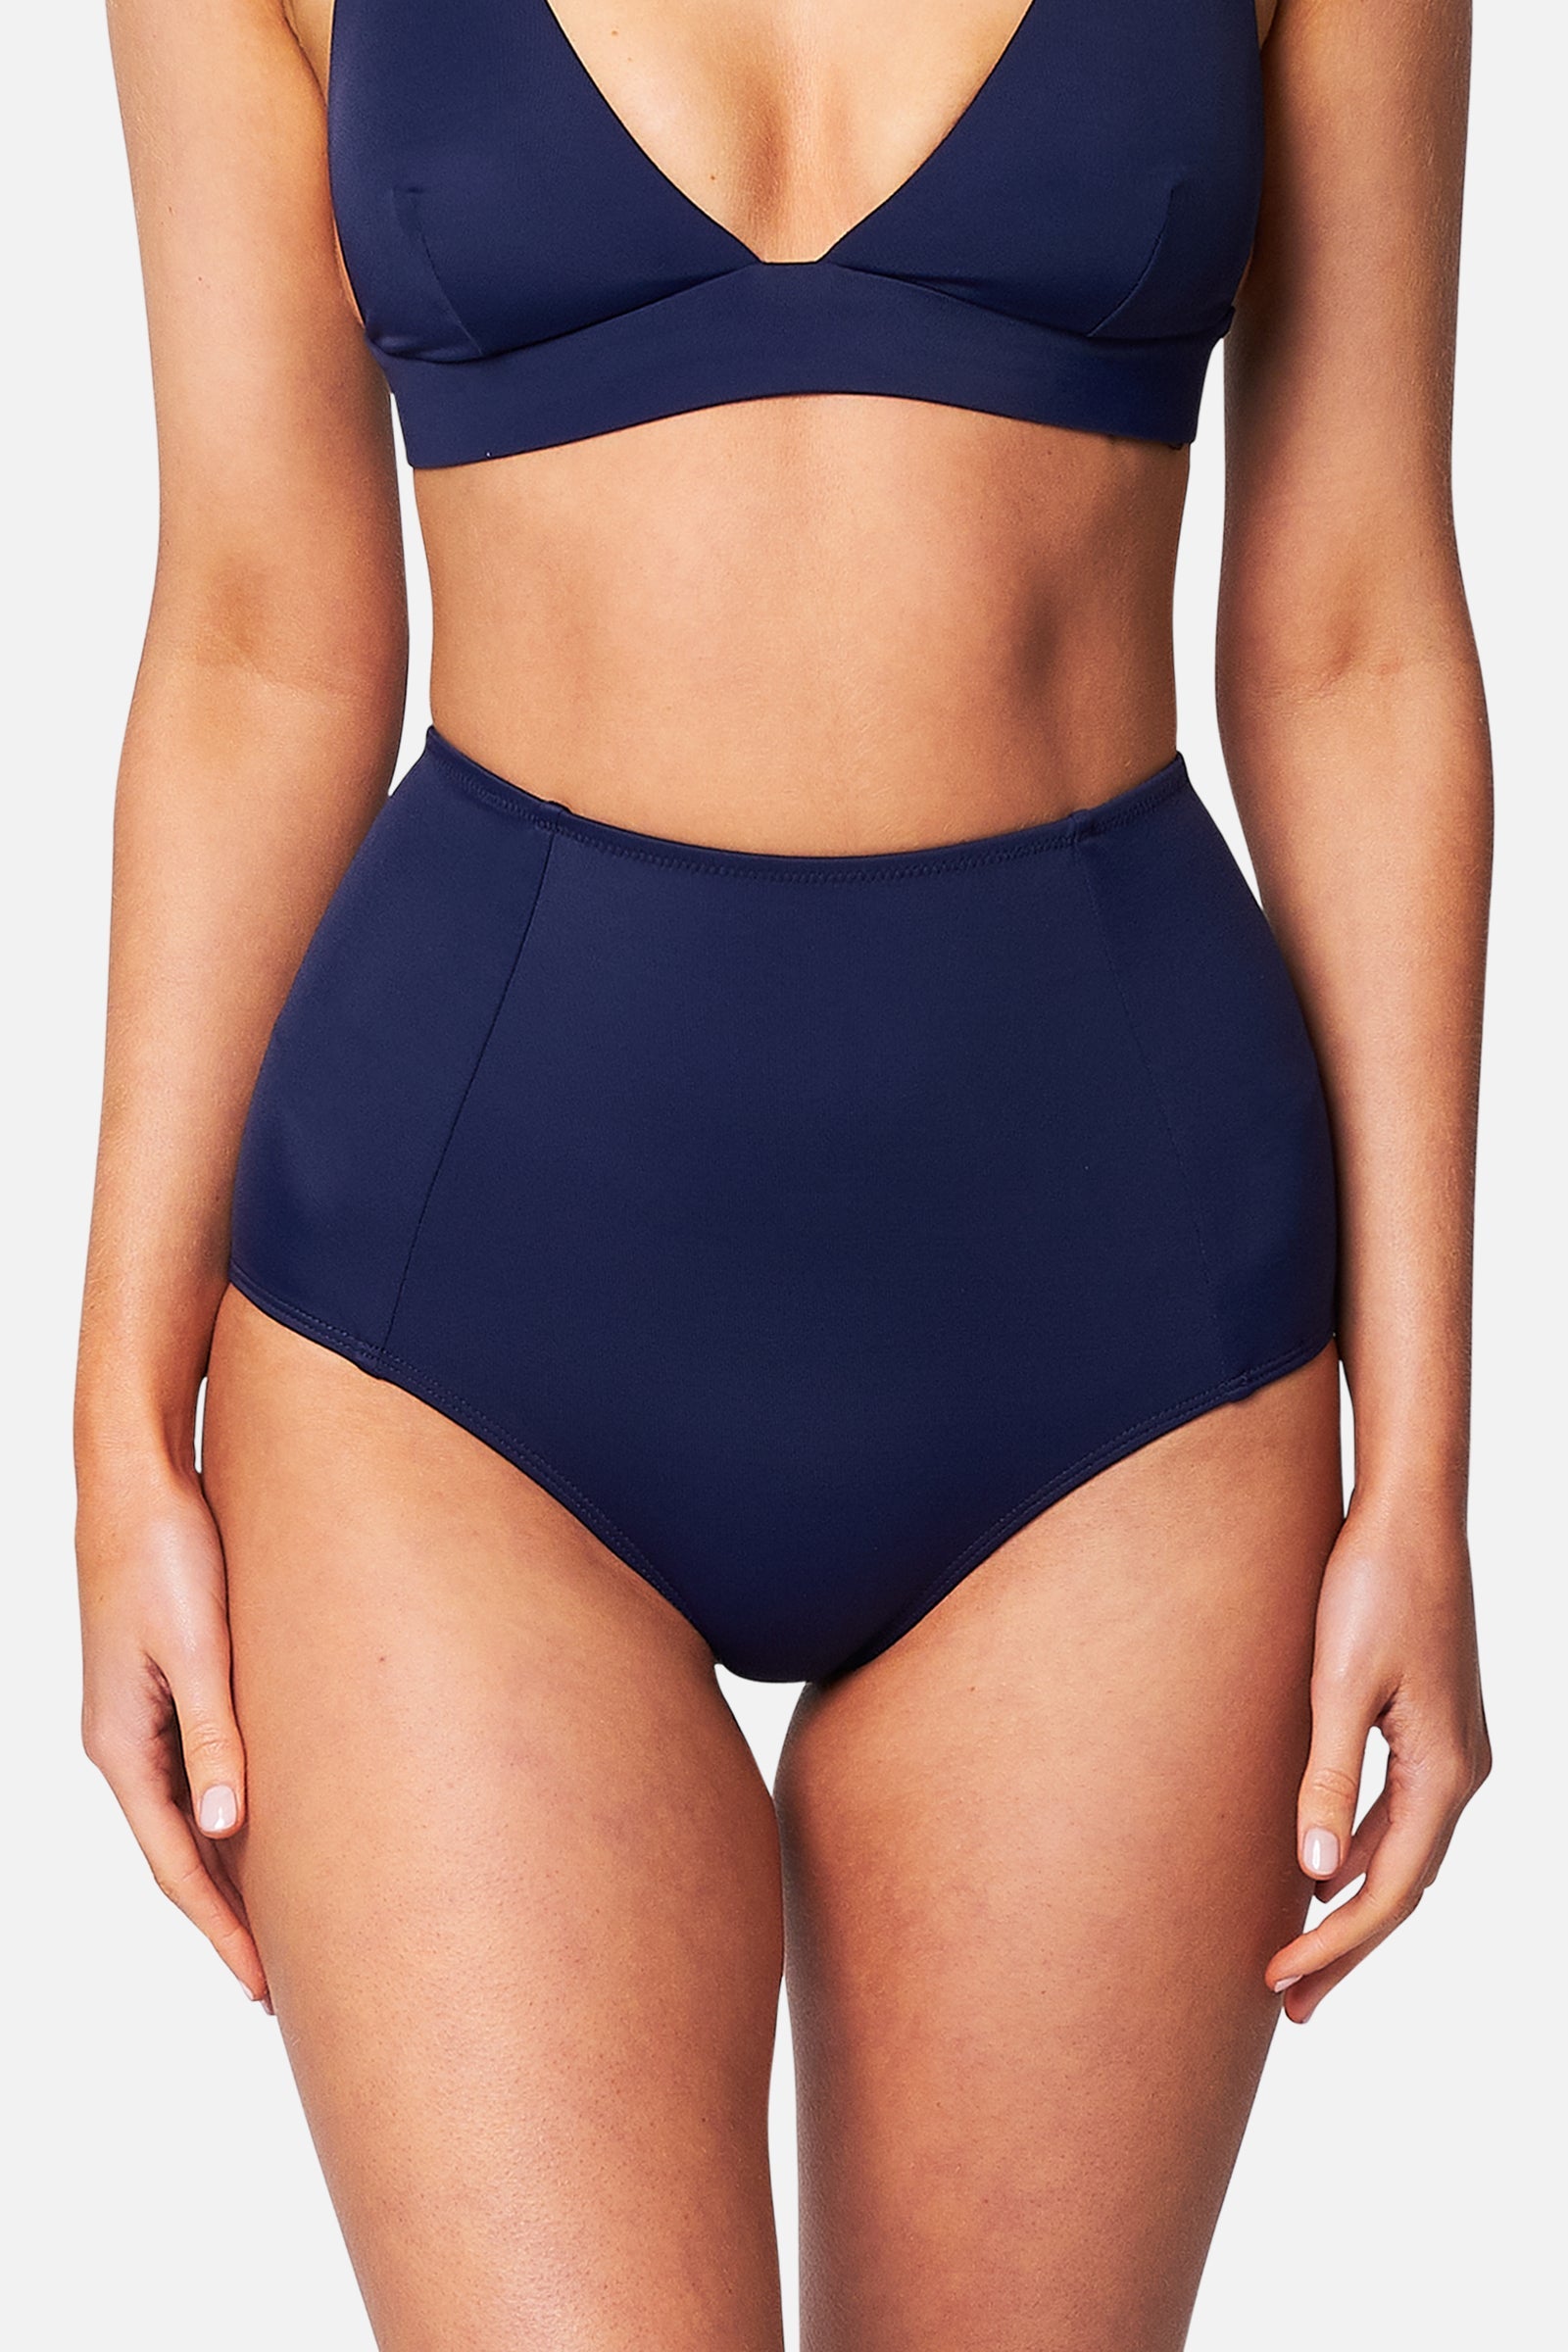  Bonneuitbebe Women's Swim Bottoms V Cut Bikini Bottoms Mid  Waisted Bathing Suit Bottoms Swimsuit Bottoms Navy Blue : Clothing, Shoes &  Jewelry